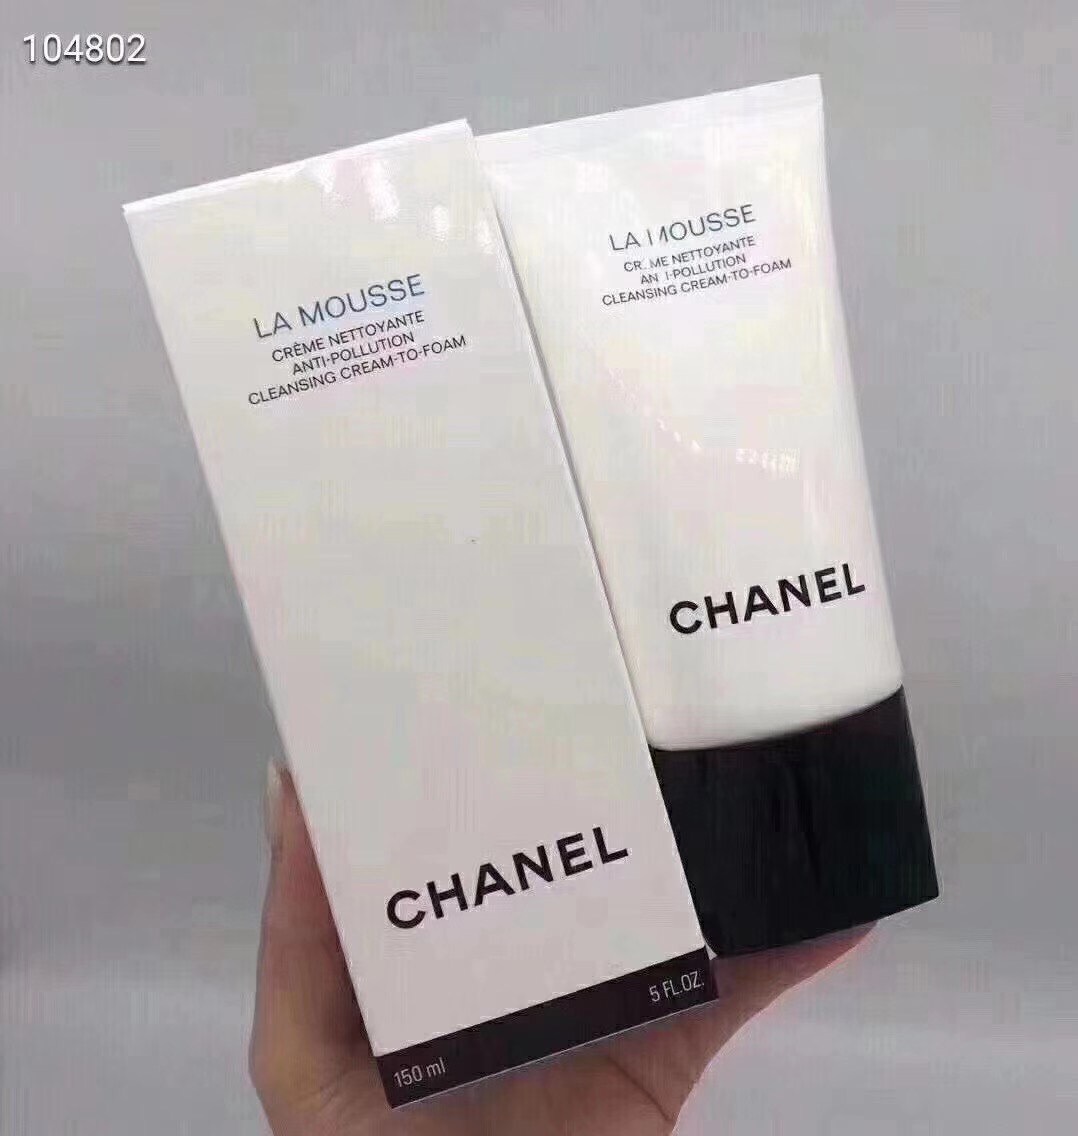 Chanel LA MOUSSE Anti-Pollution Cleansing CREAM-TO FOAM 5.0 oz